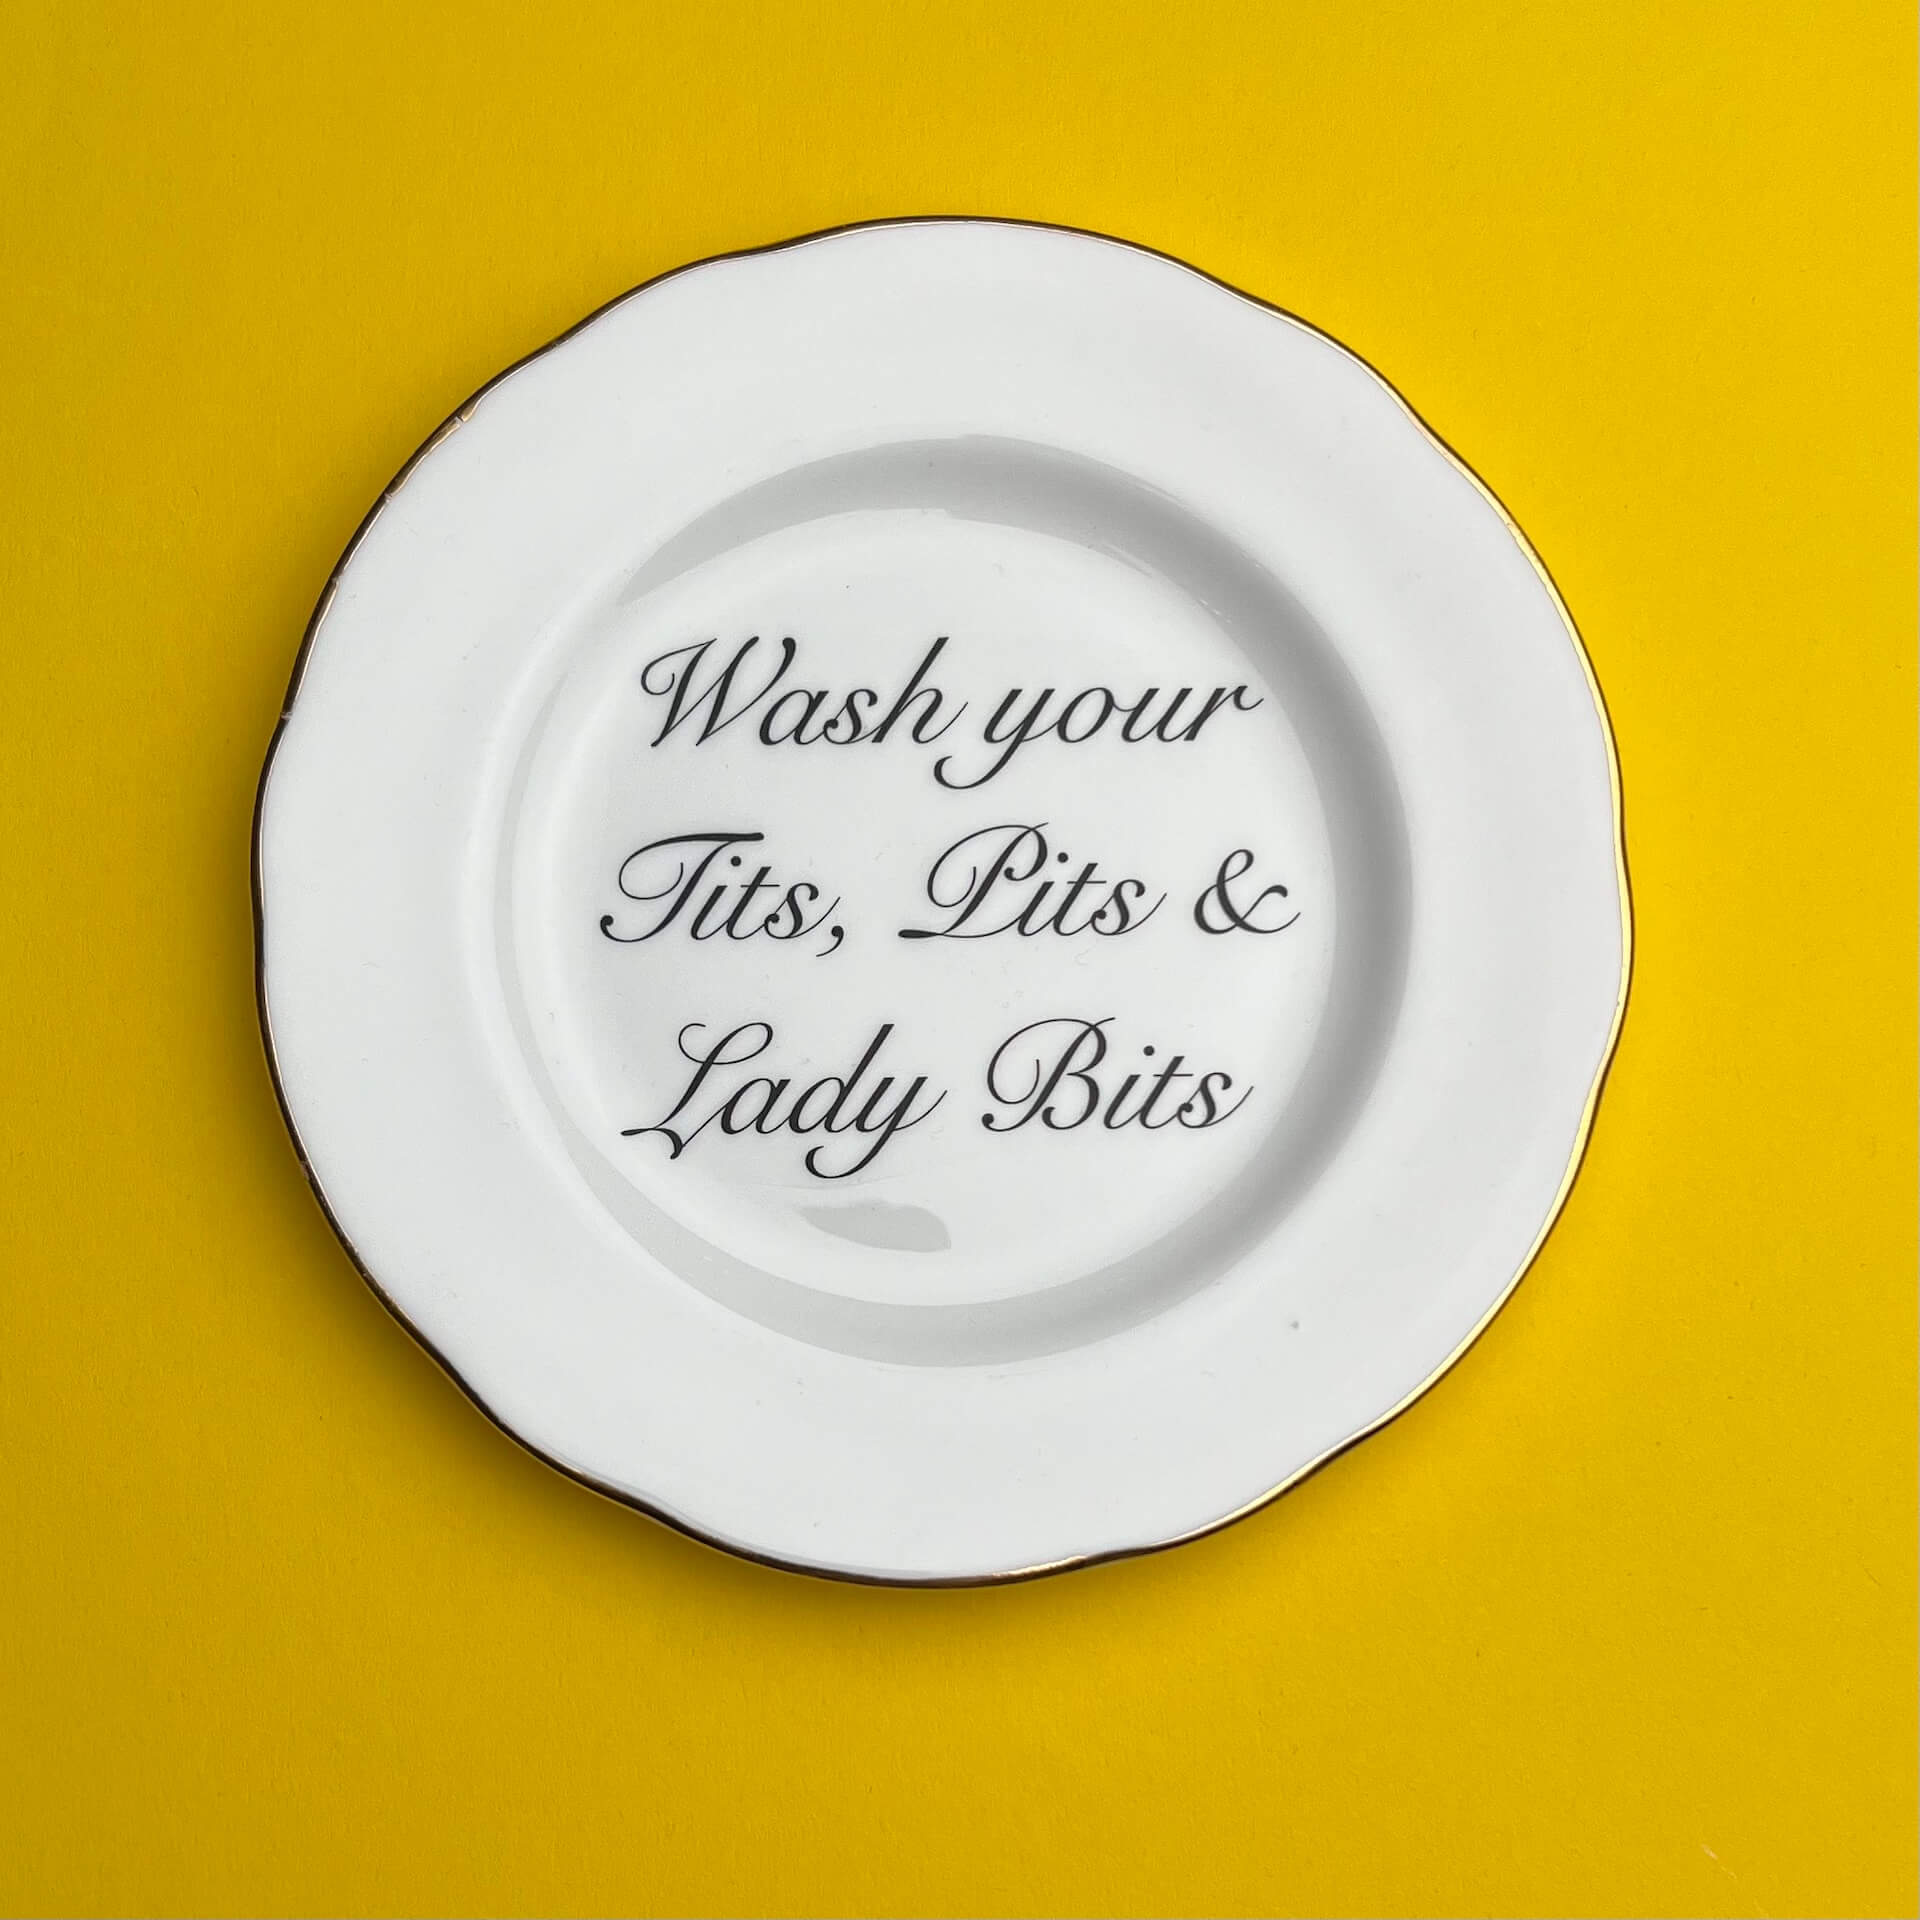 Beau & Badger Ceramics D Decorative Wall Plate - Wash Your T*ts, Pits & Lady Bits